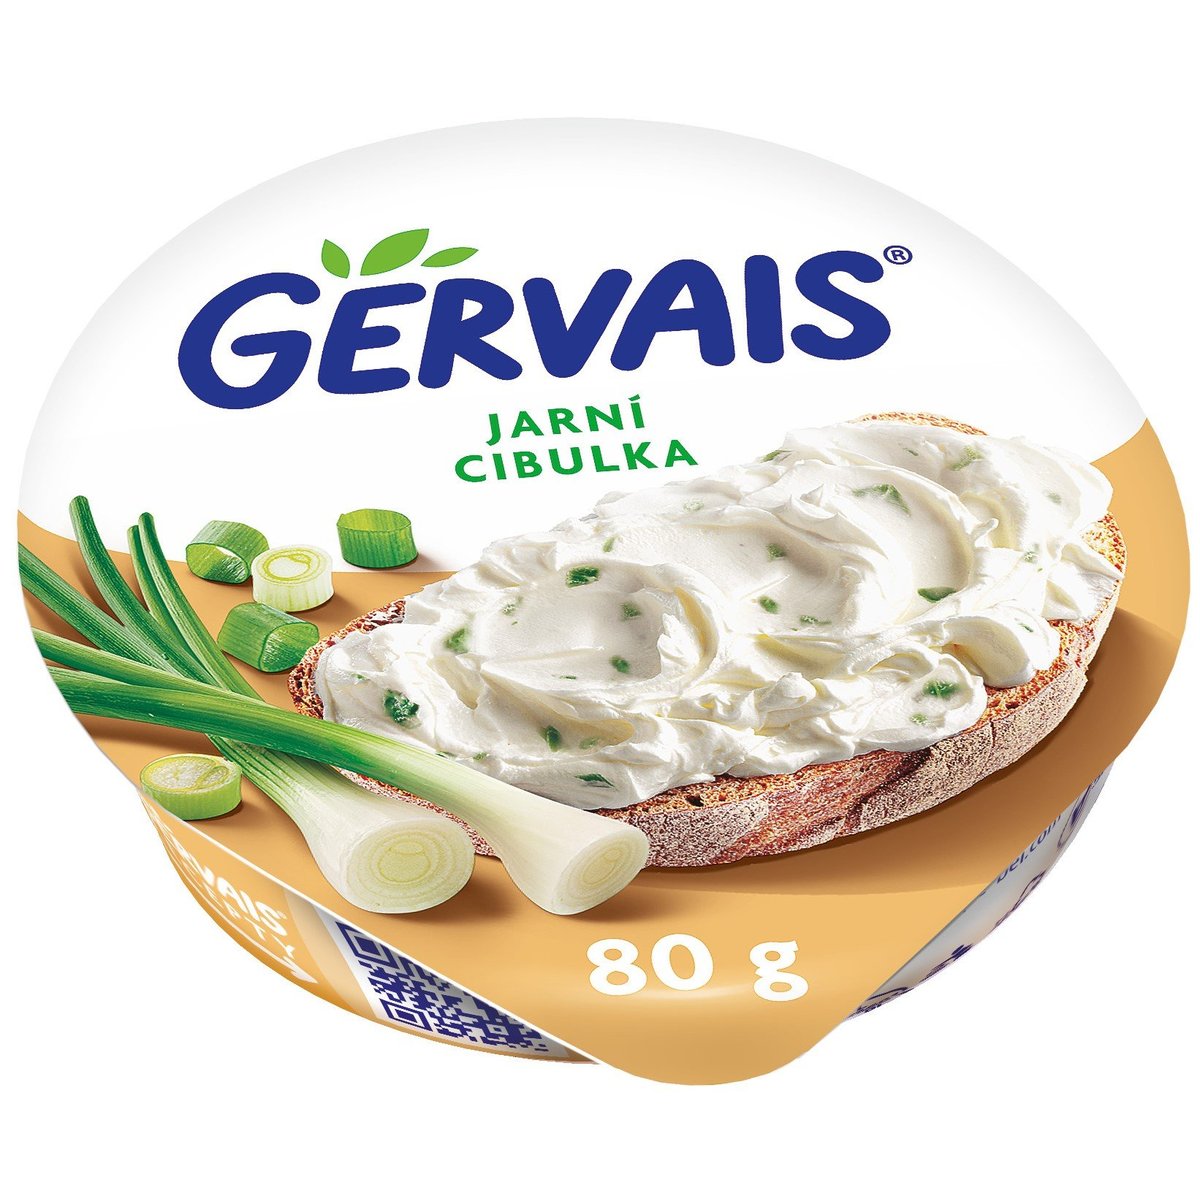 Gervais Original s jarní cibulkou